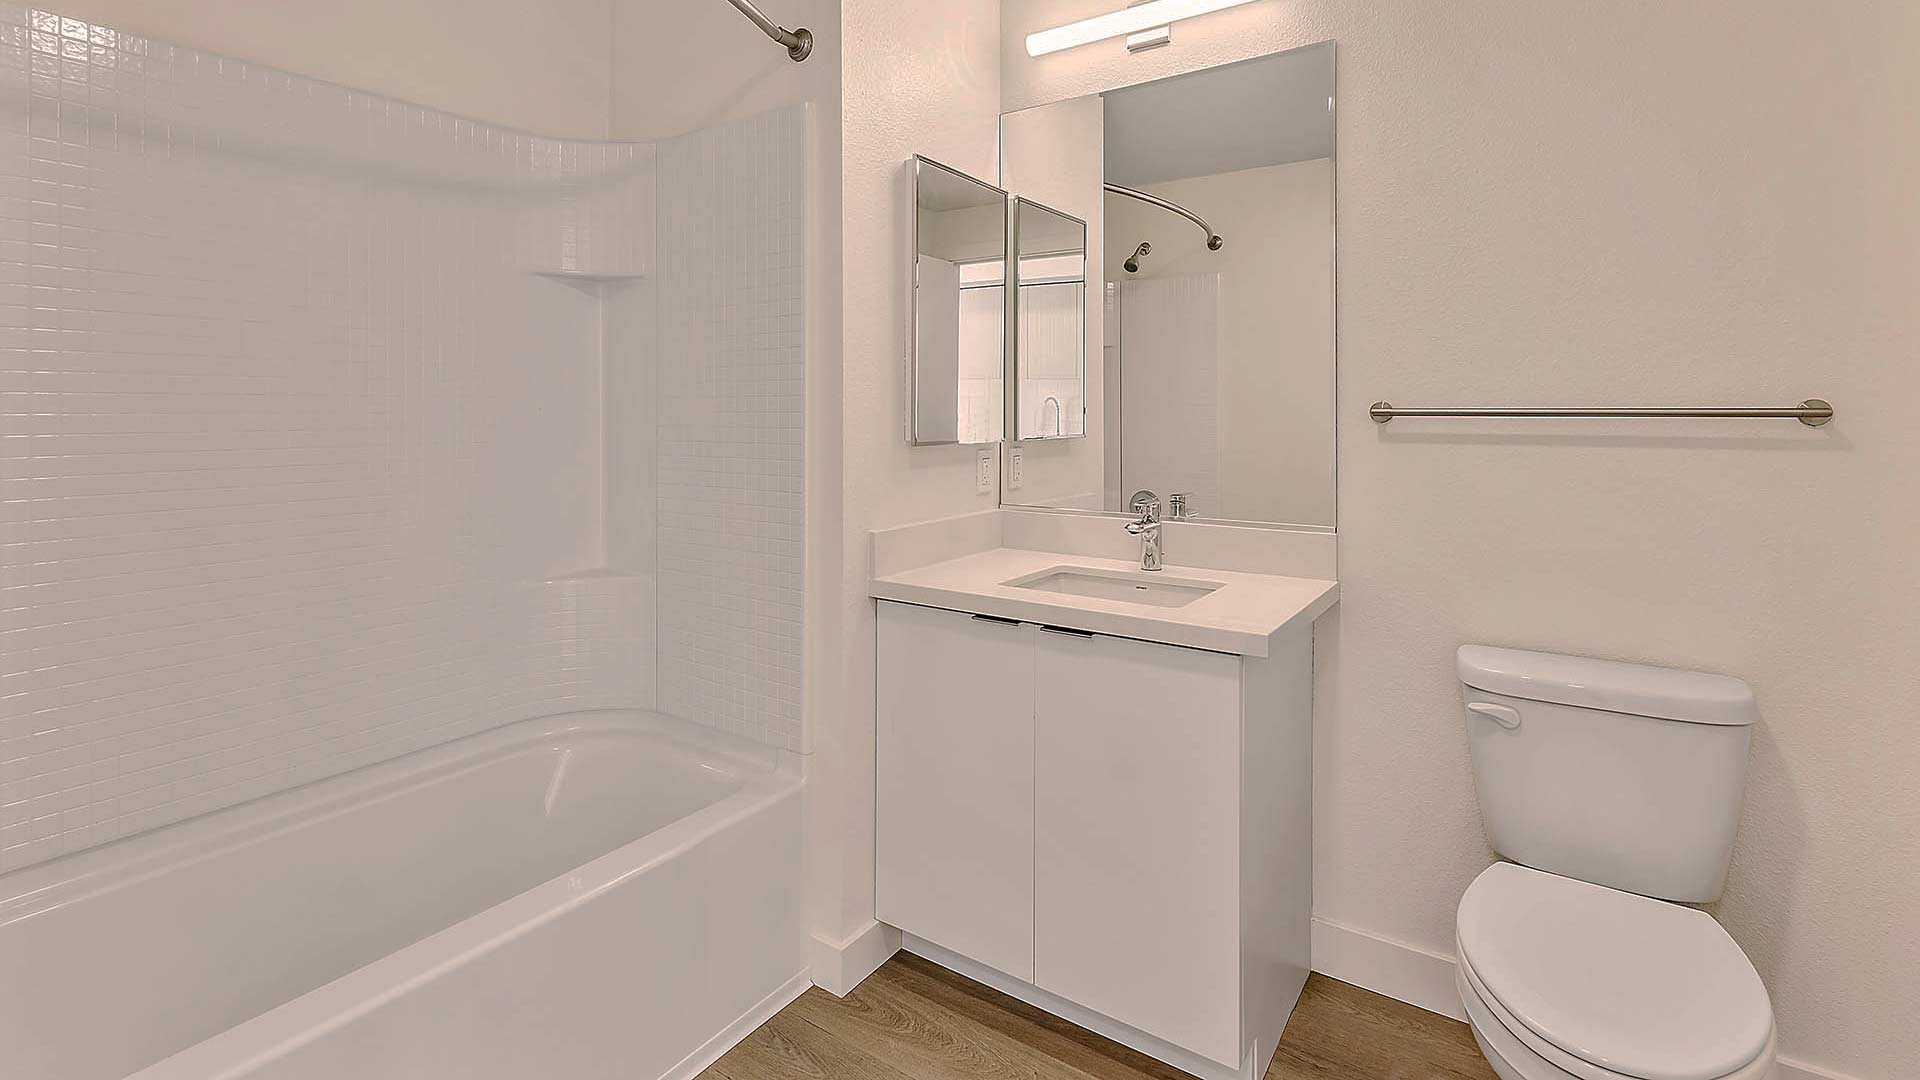 Blake apartments a1 floorplan bathroom 1